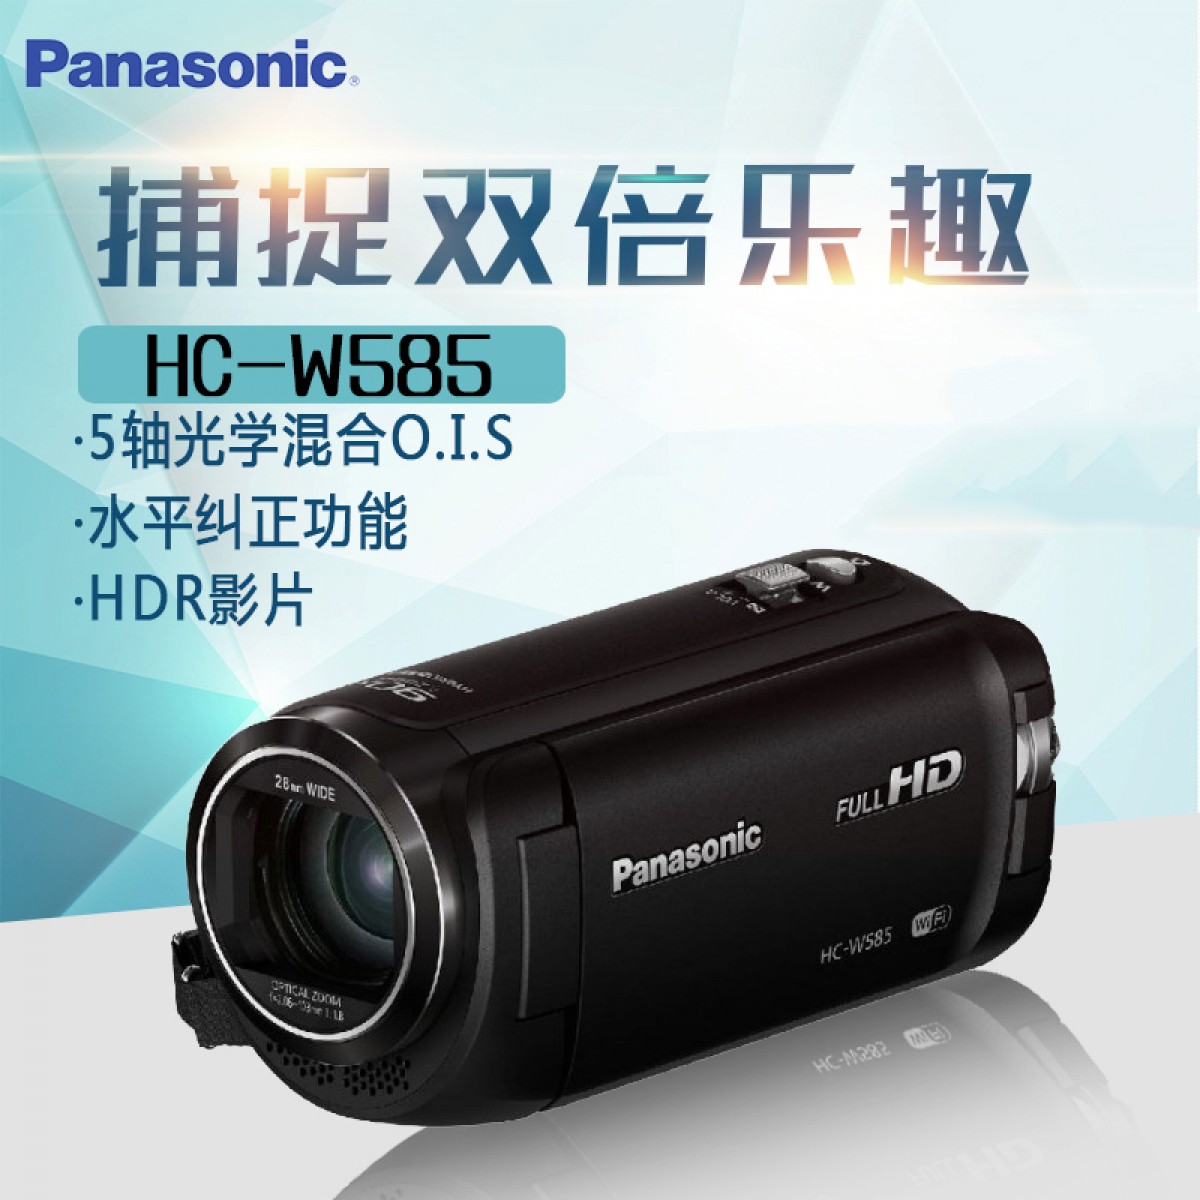 Panasonic/松下 HC-W585GK 高清数码摄像机 双摄像头 家用闪存DV